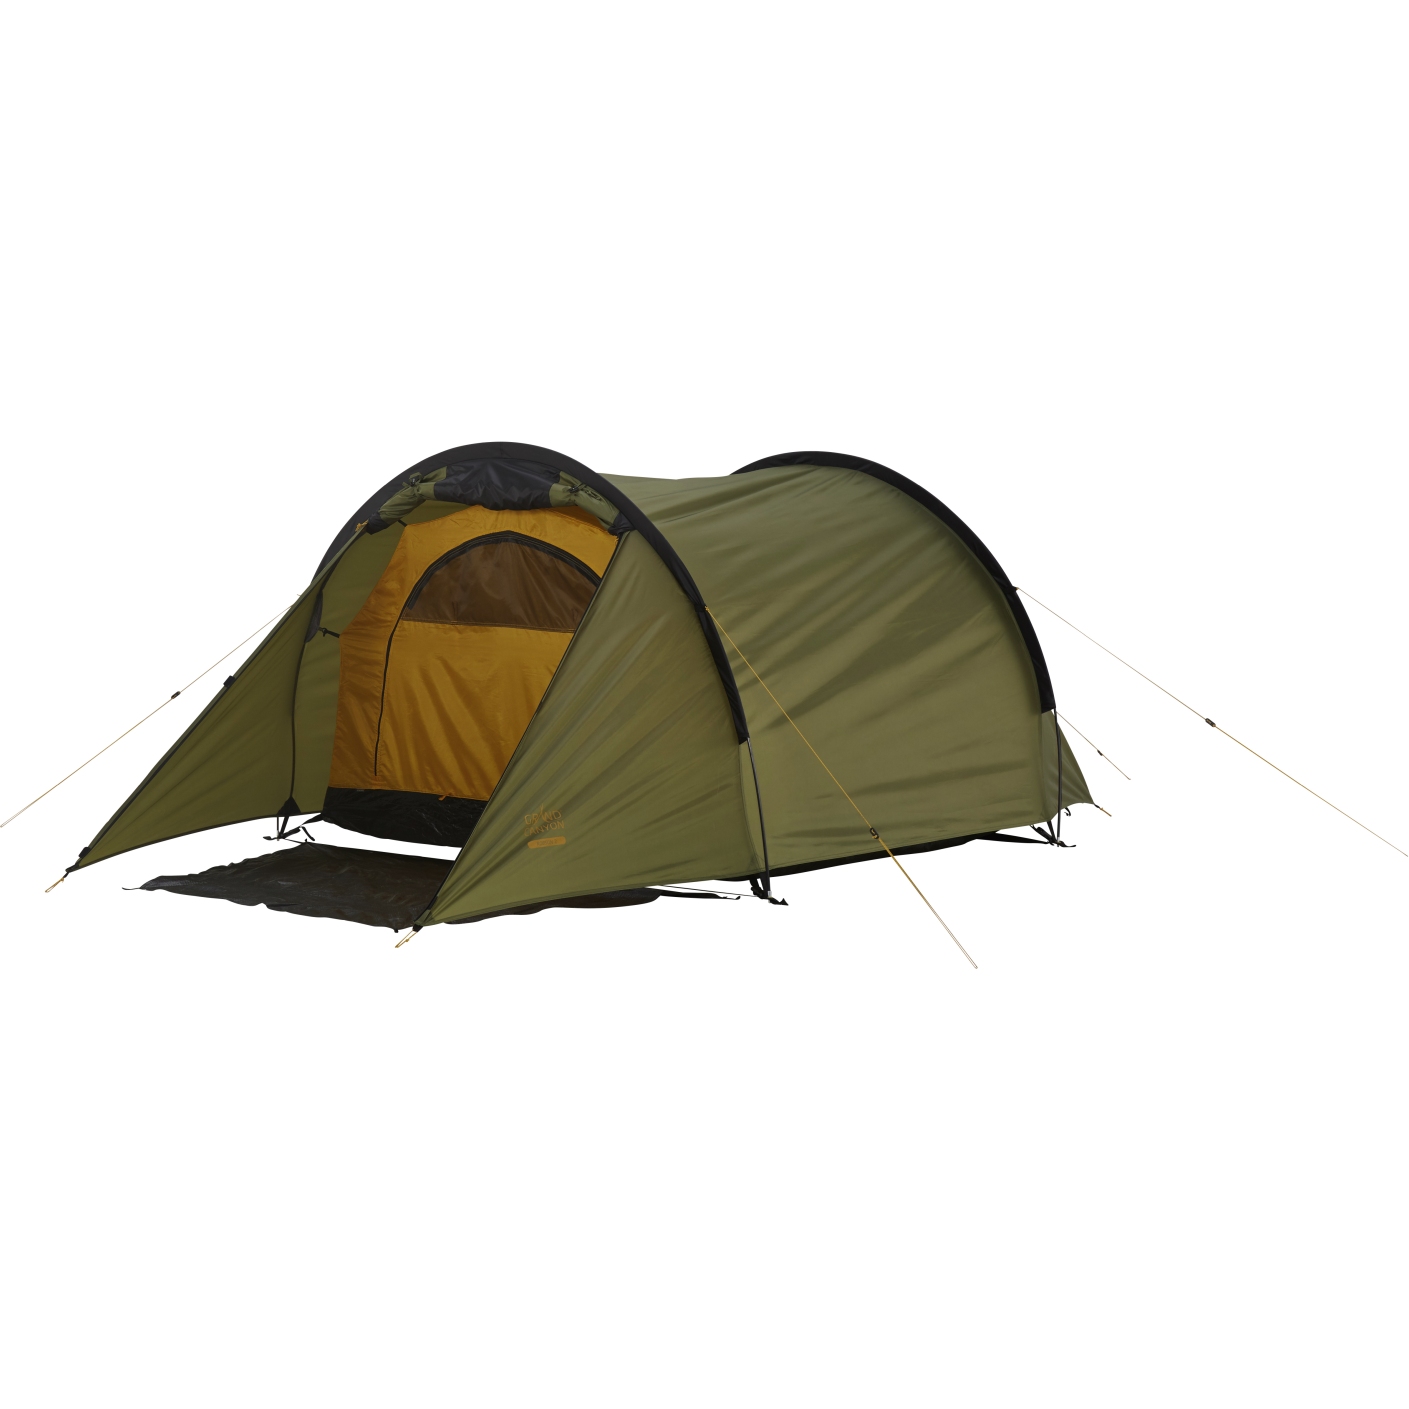 Productfoto van GRAND CANYON Robson 2 Tent - Capulet Olive